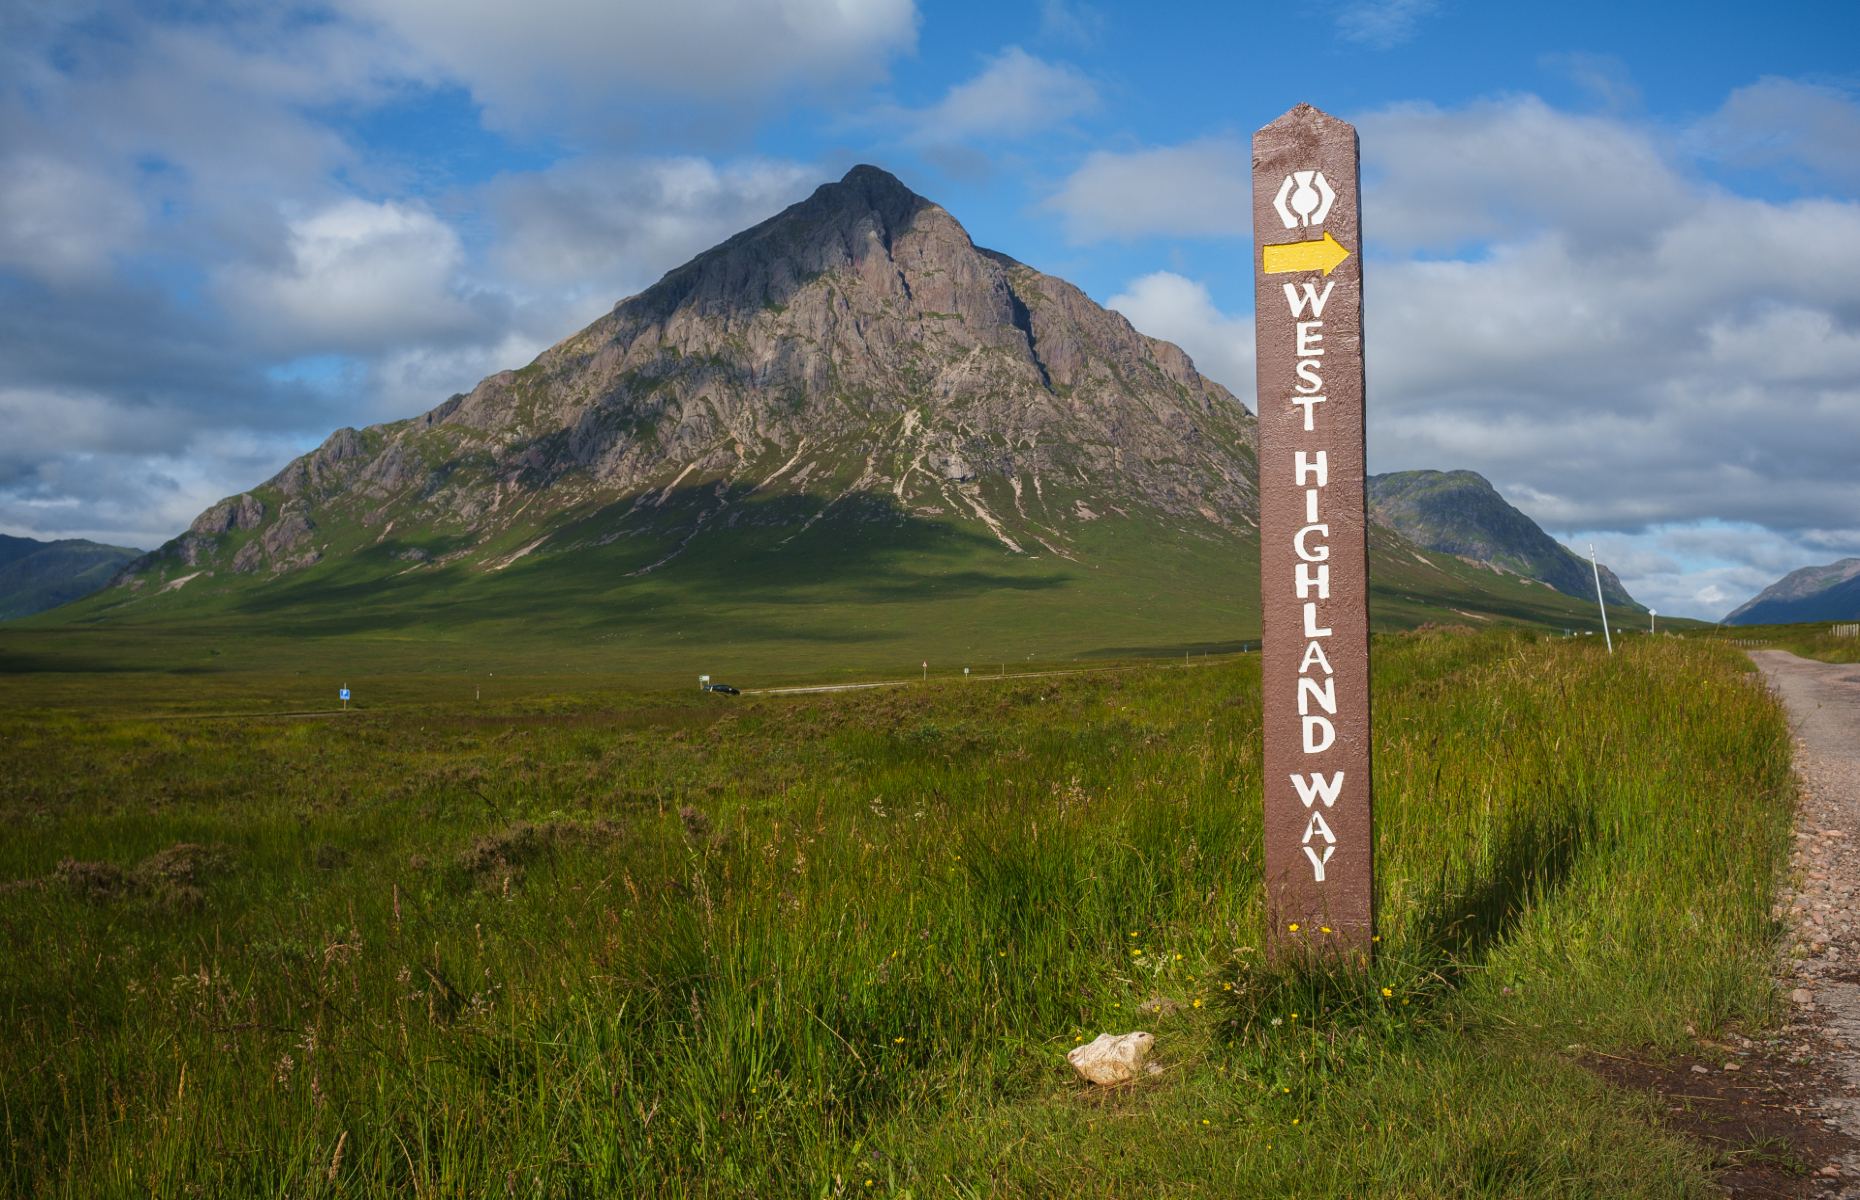 West Highland Way (Image: Juraj Kamenicky/Shutterstock)